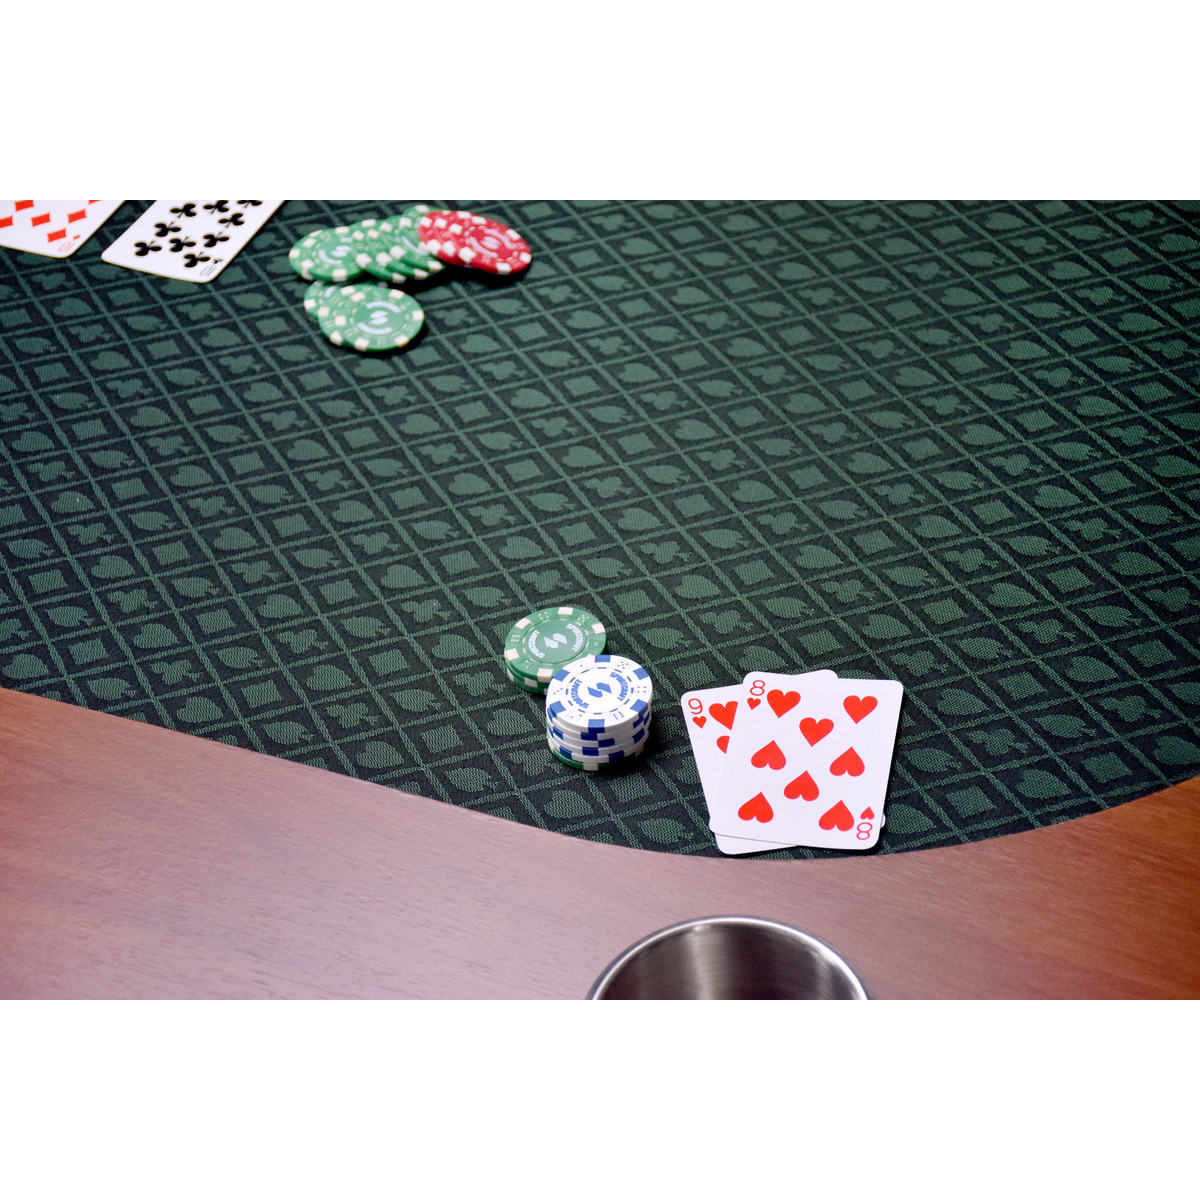 North Pokertafel Foldy 10 Personen Groen